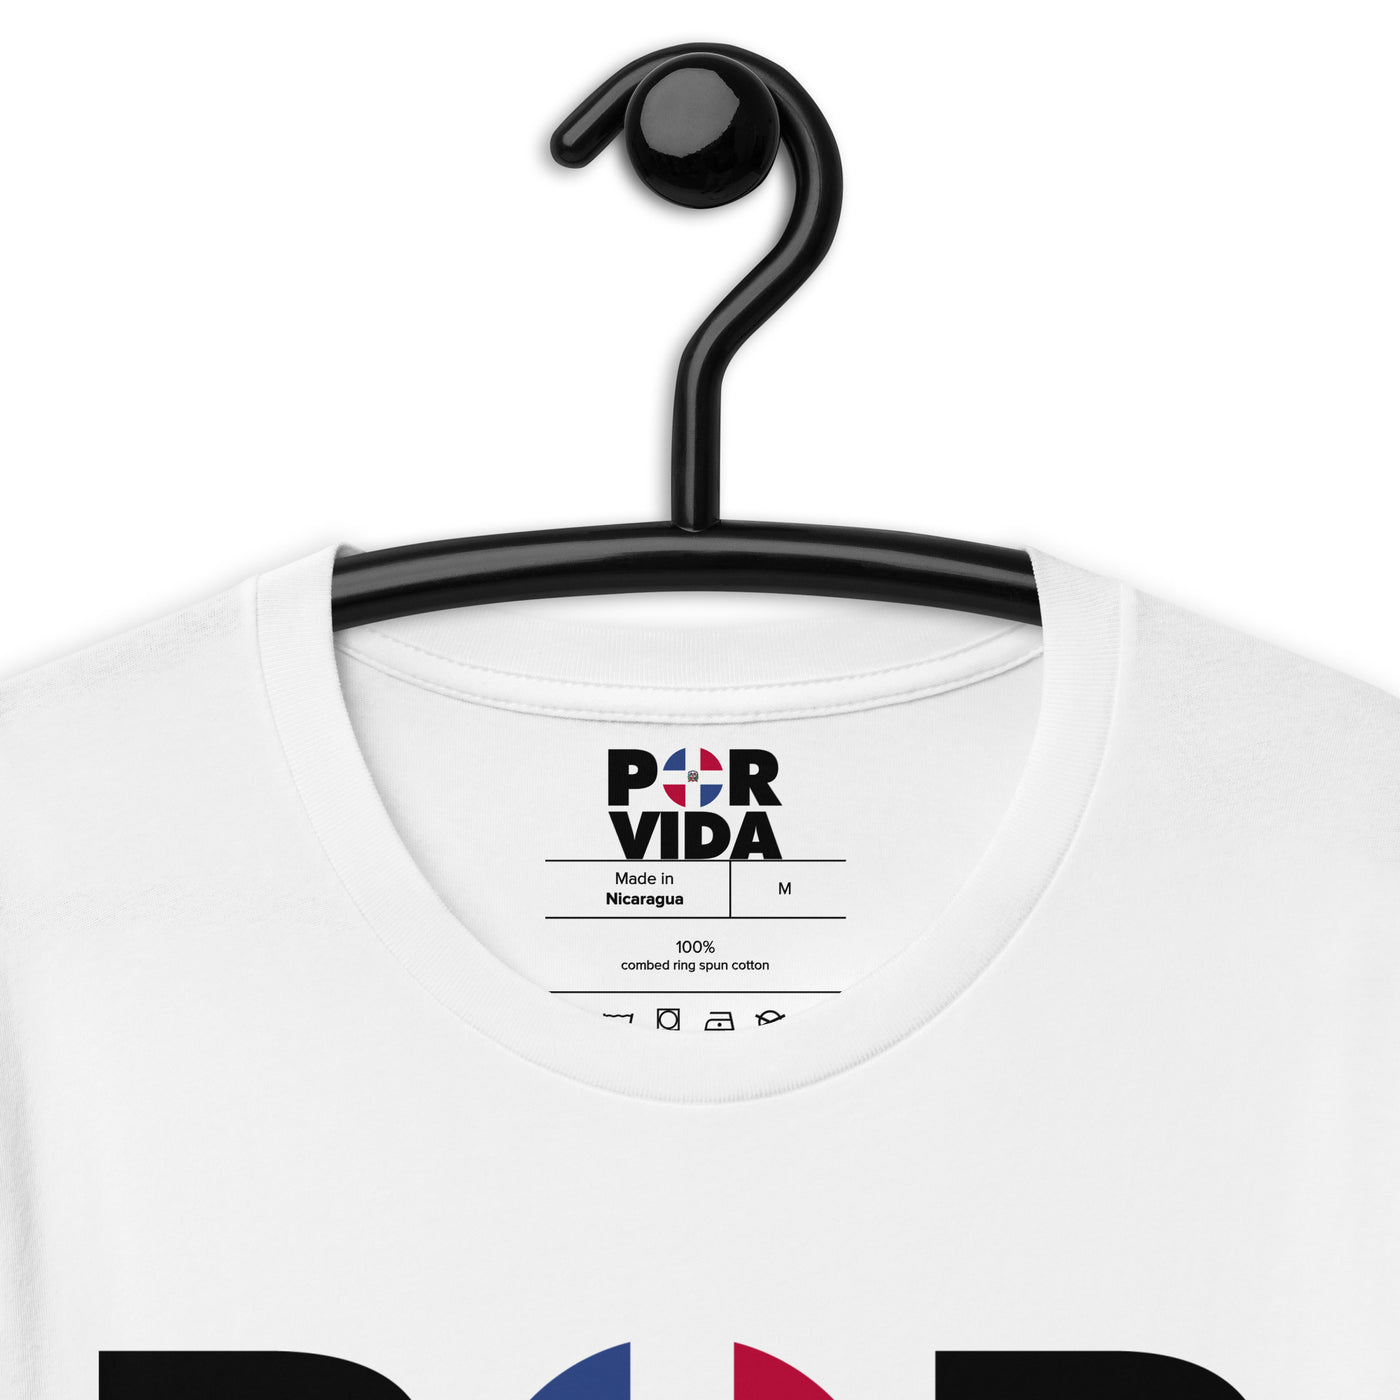 POR VIDA DR (Black Text) Unisex t-shirt